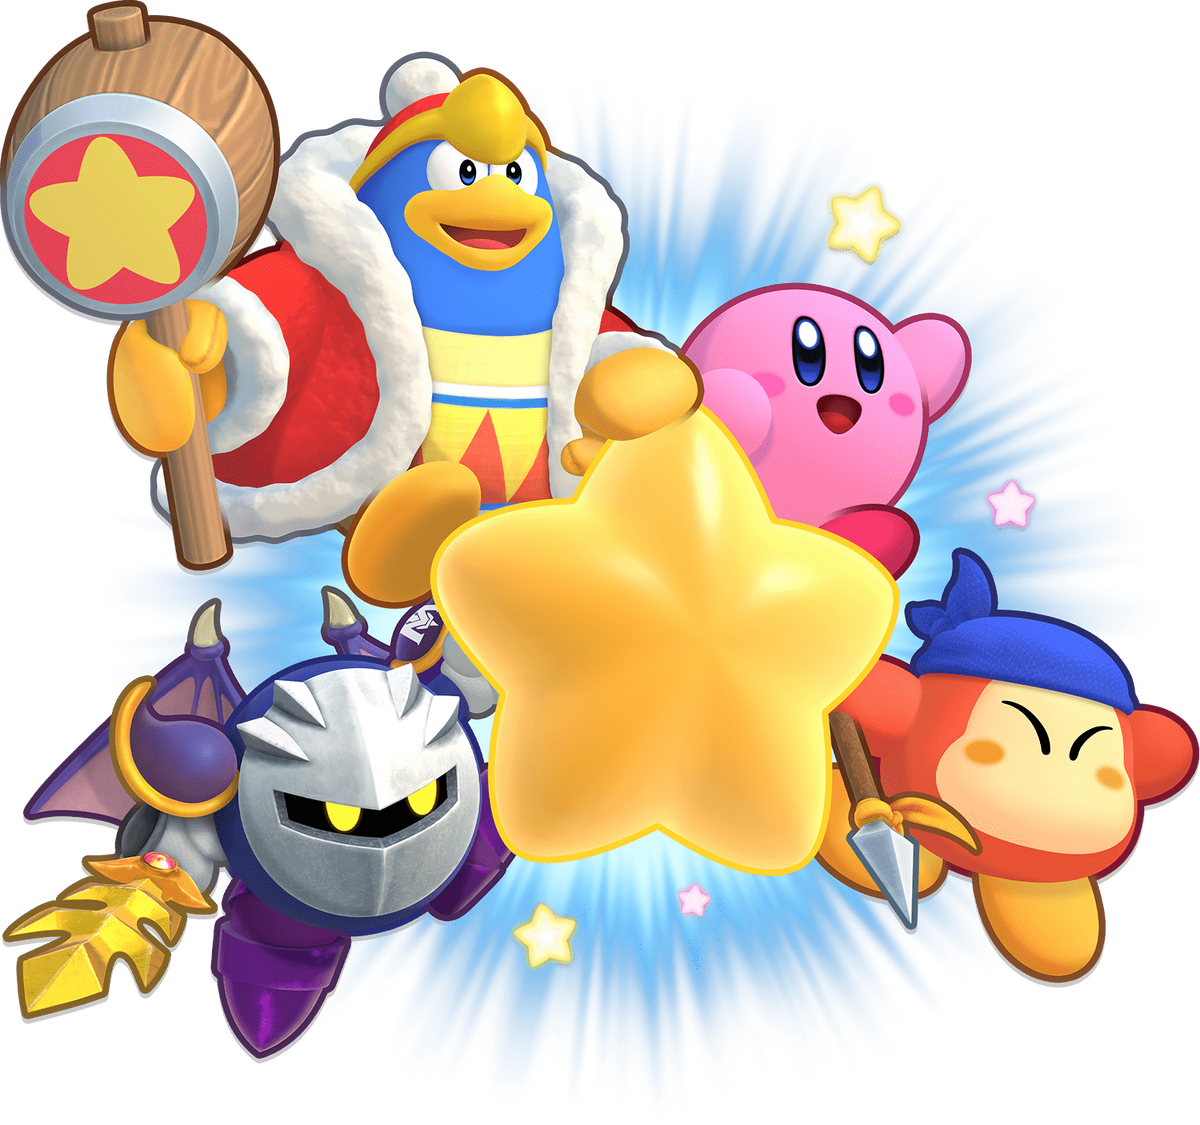 Kirby return. Kirby's Dream Land. Kirby's Return to Dream Land. Dreamland Deluxe Kirby. King Dedede Kirby Return to Dreamland Deluxe.